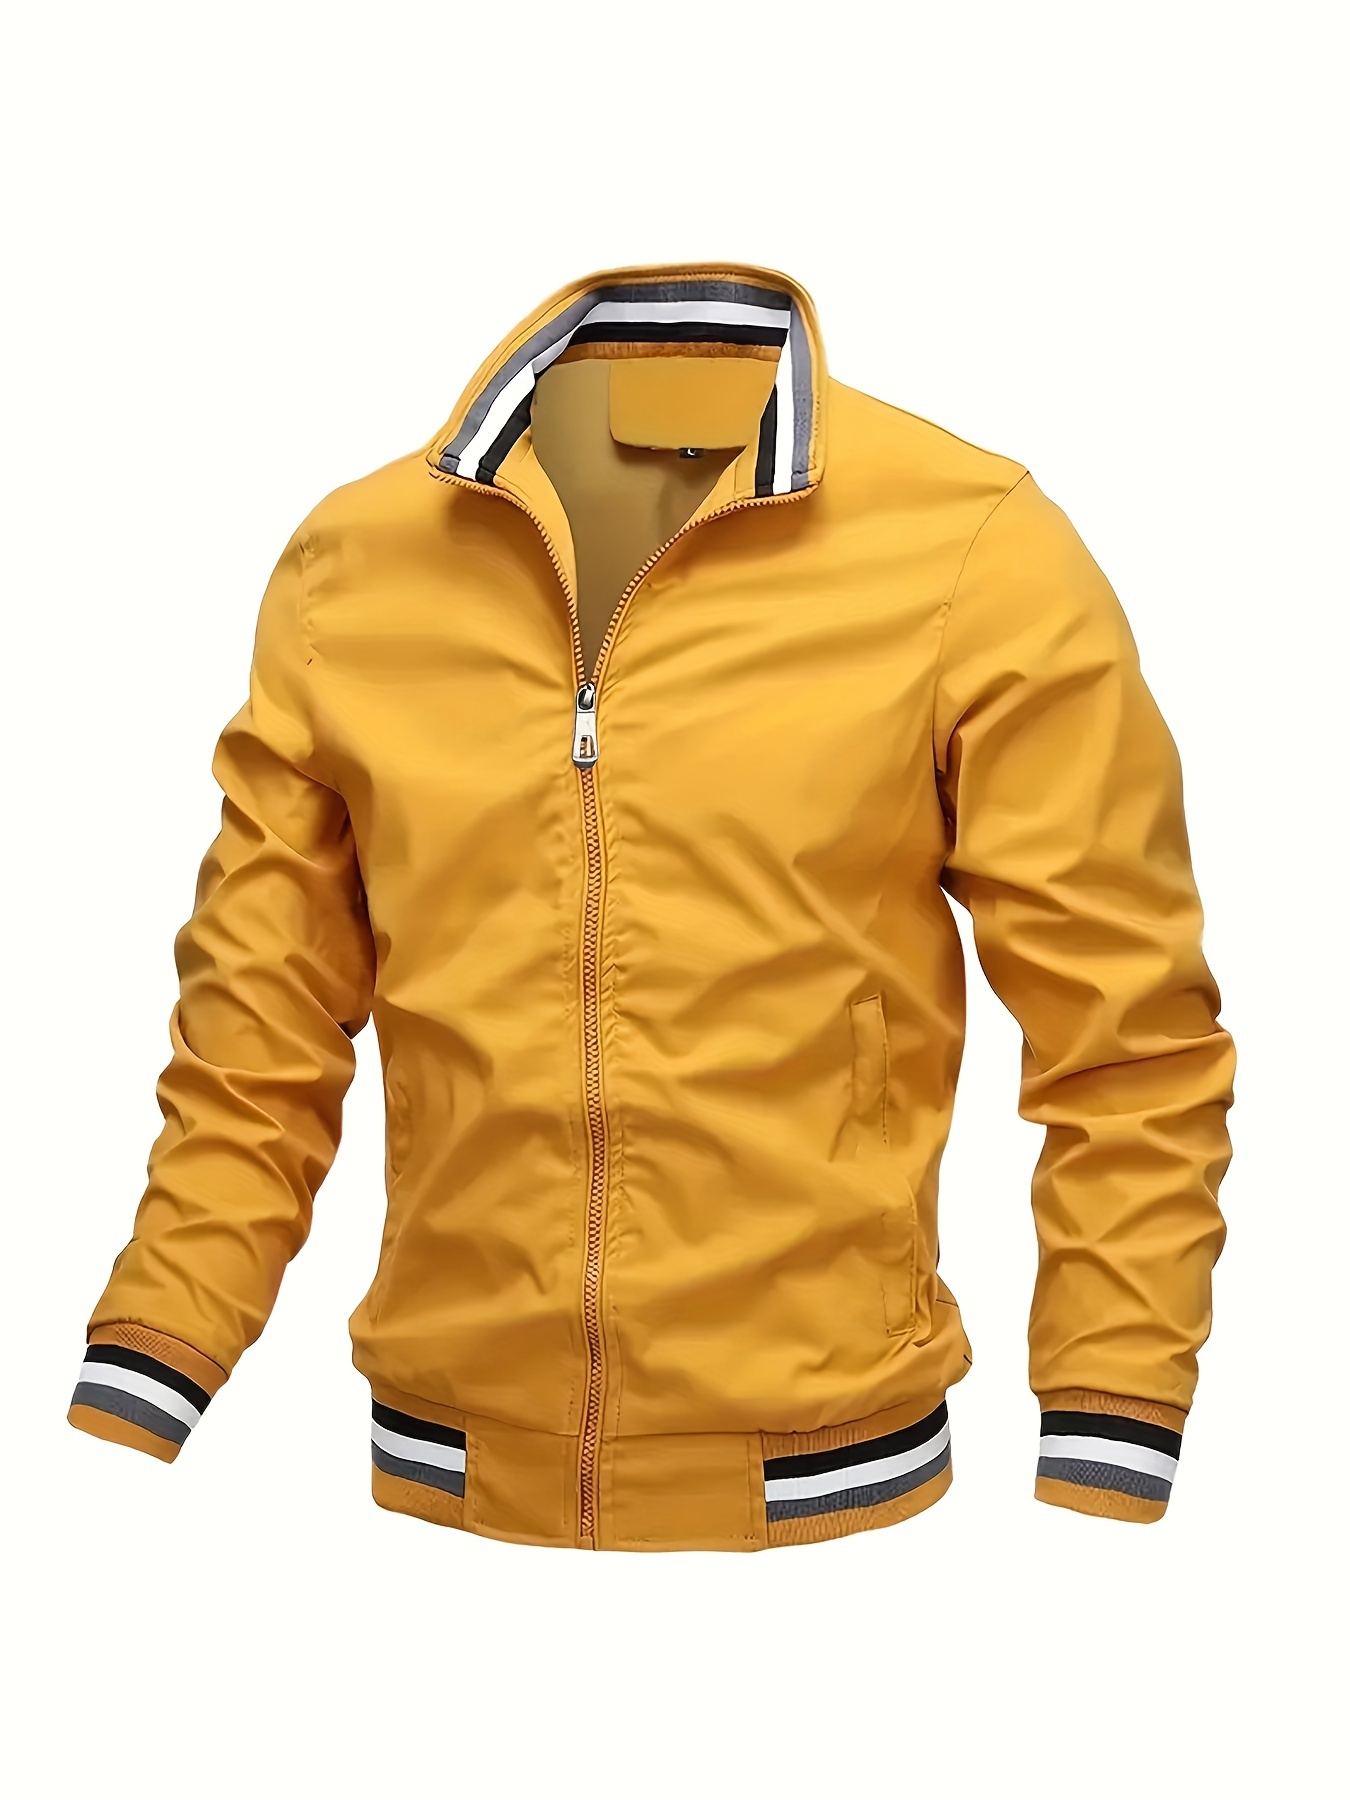 Reebok Men's Casual Jacket - Yellow - XL